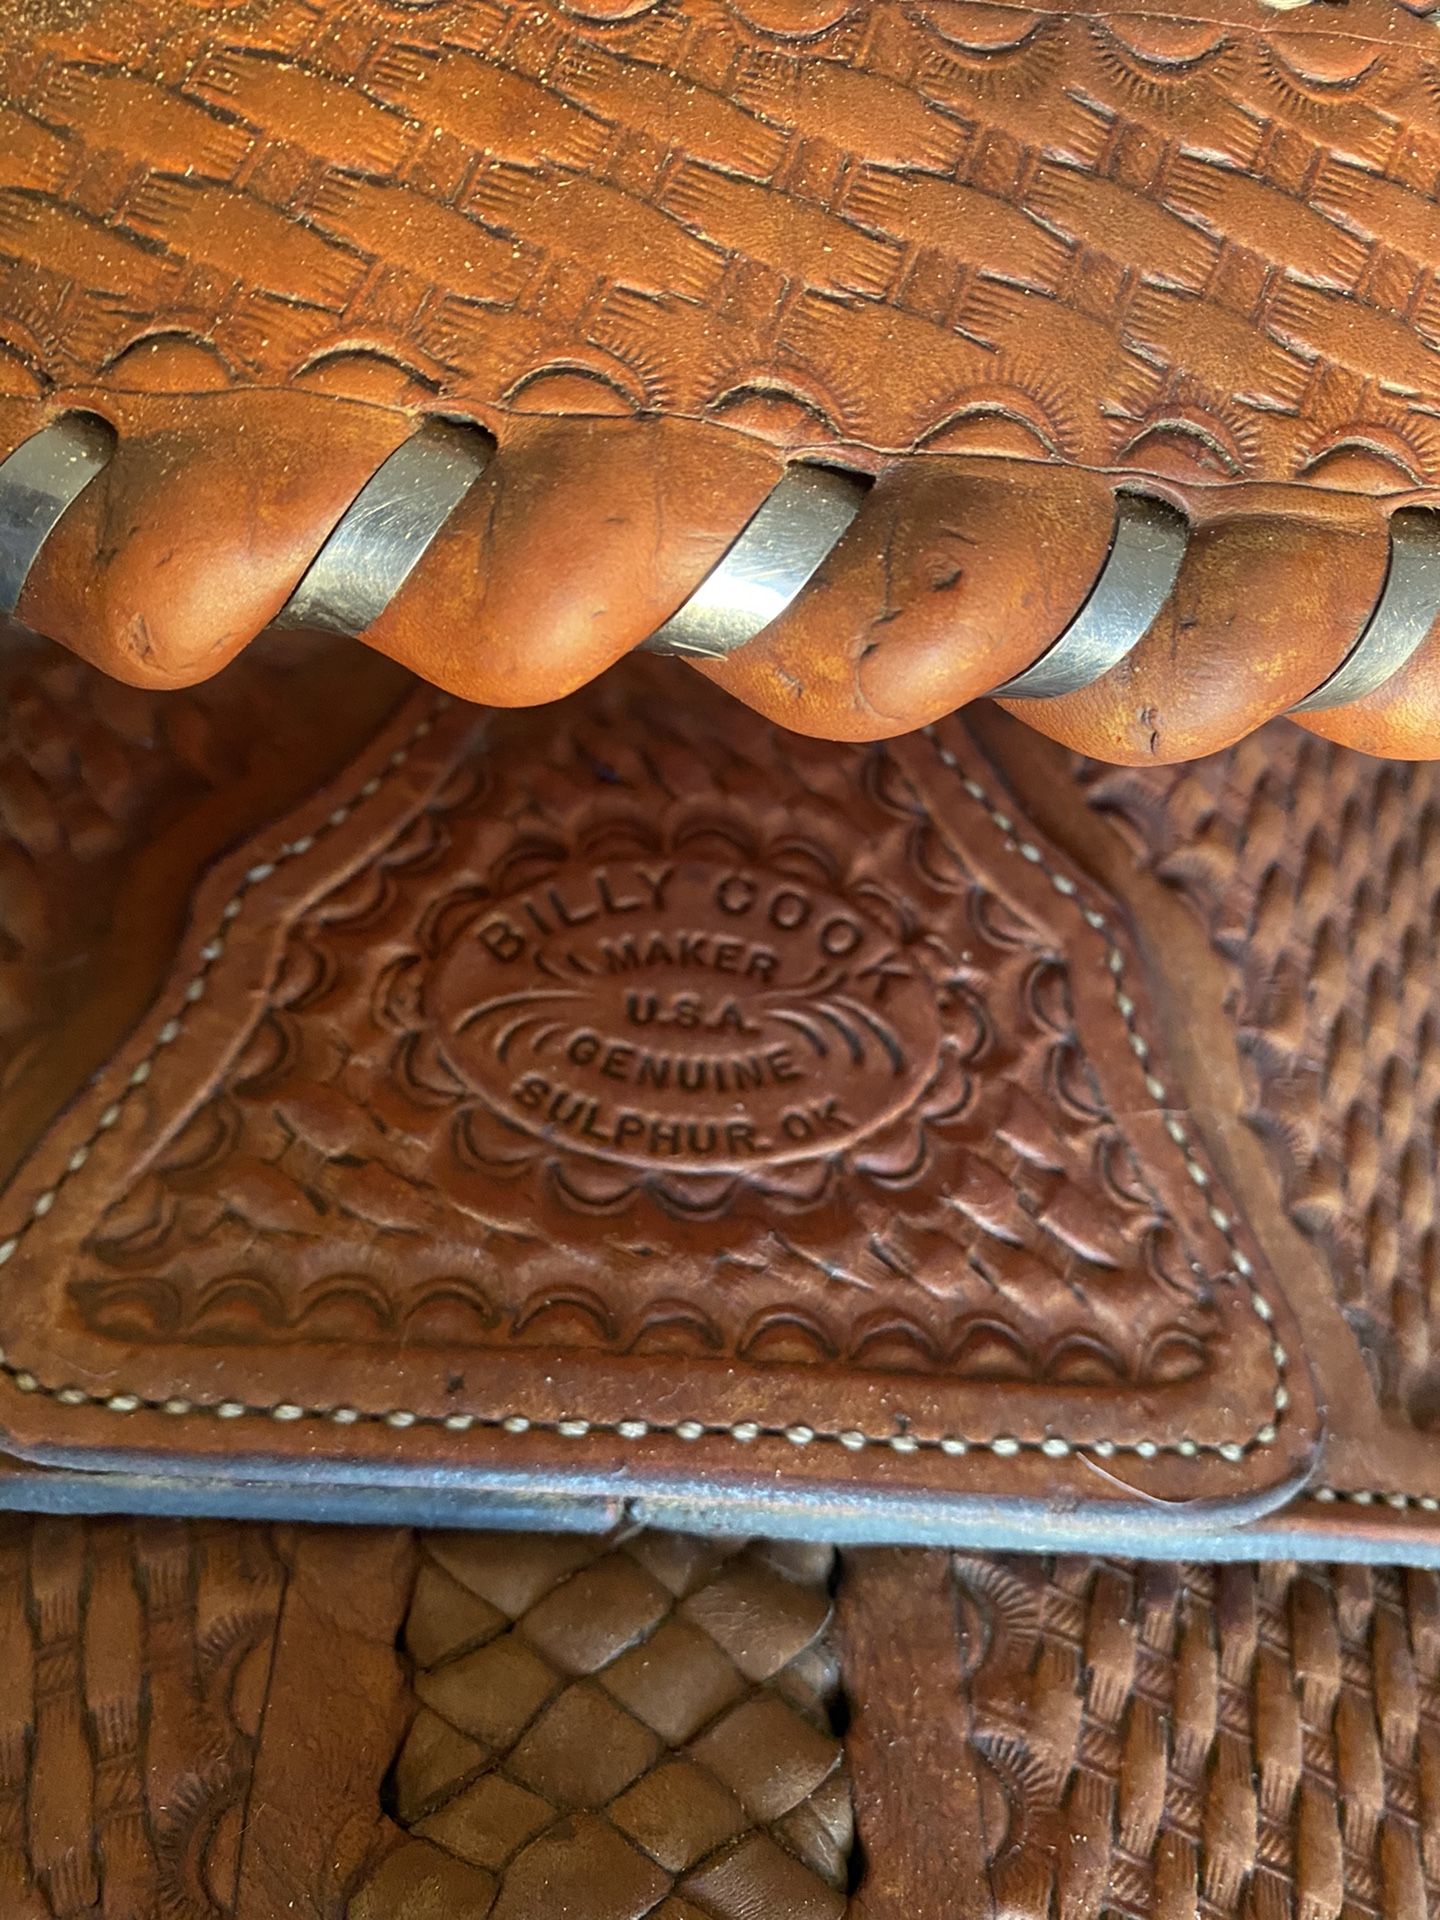 Billy Cook genuine saddle